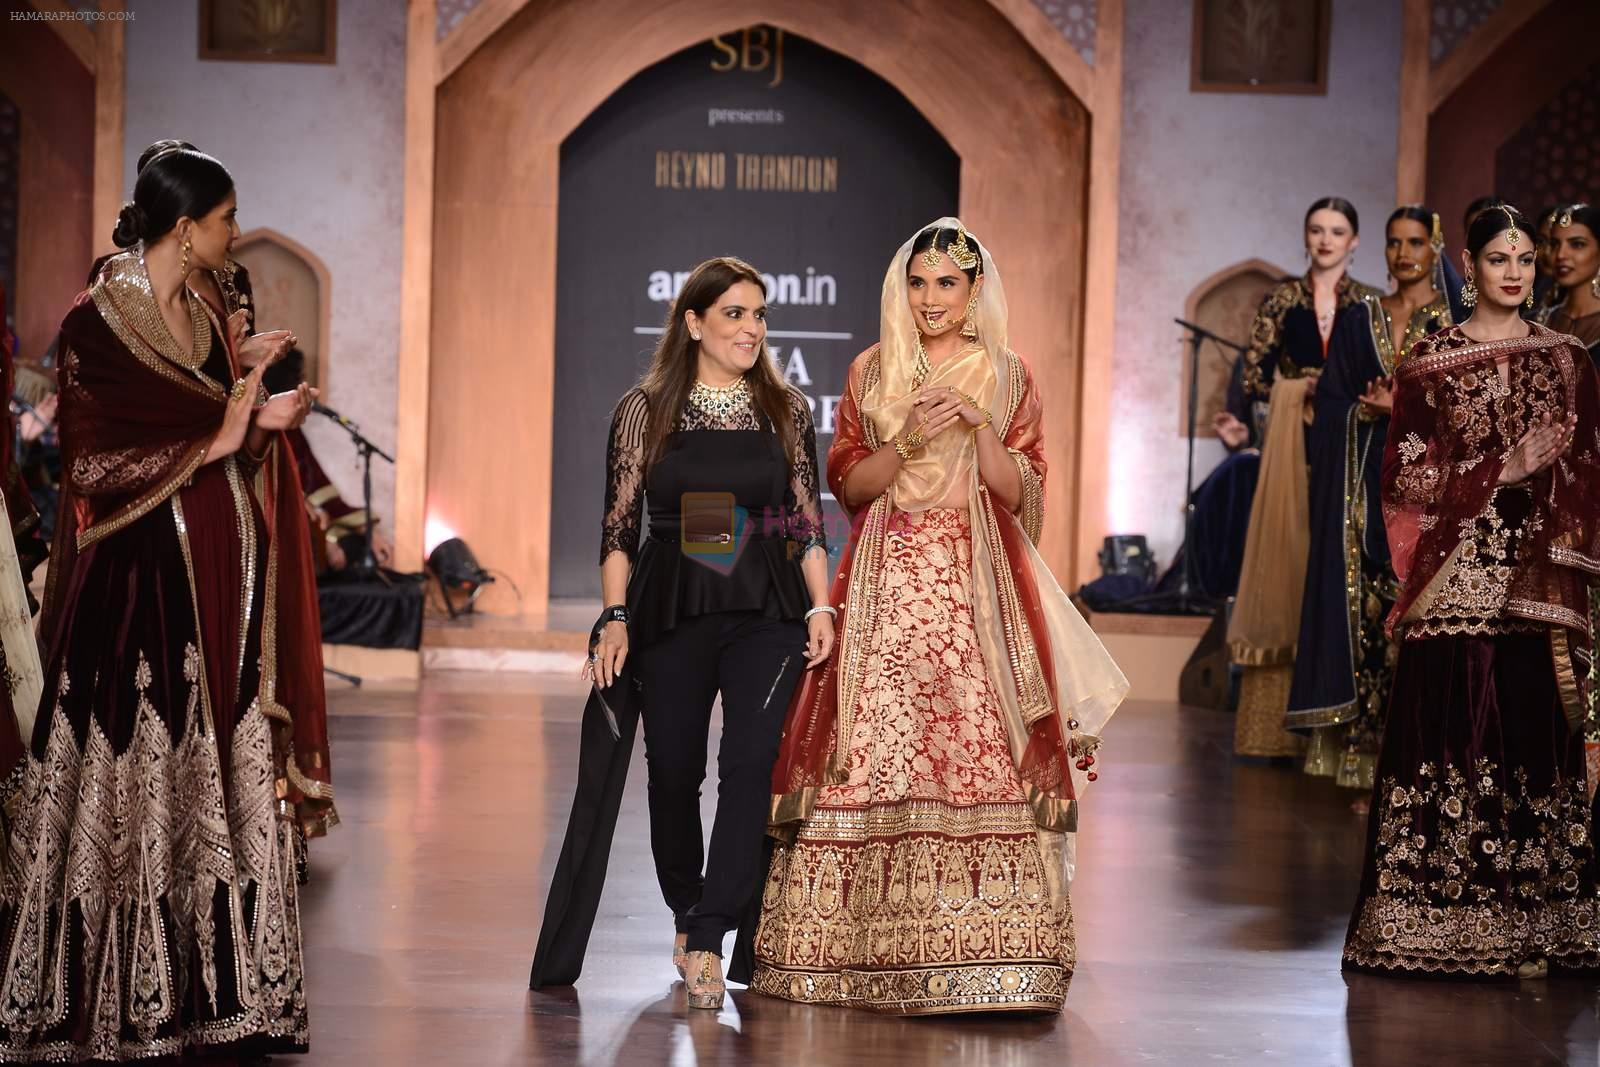 Richa Chadda walk for Reynu Tandon Show at India Couture Week 2015 on 1st Aug 2015